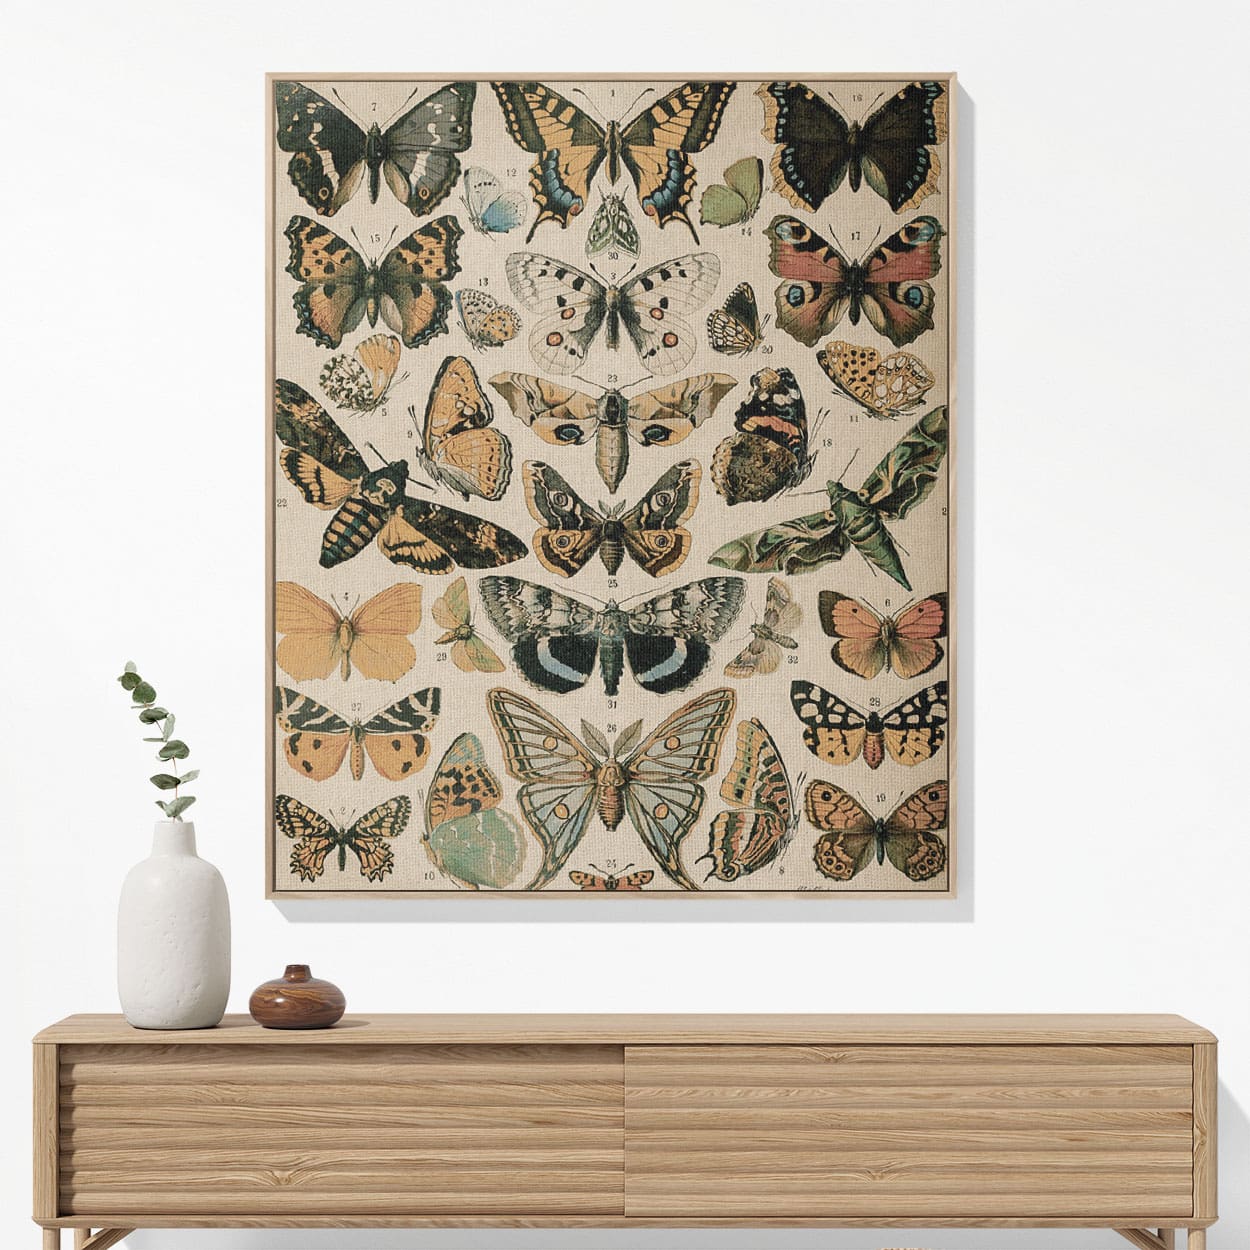 Butterflies Woven Blanket Woven Blanket Hanging on a Wall as Framed Wall Art